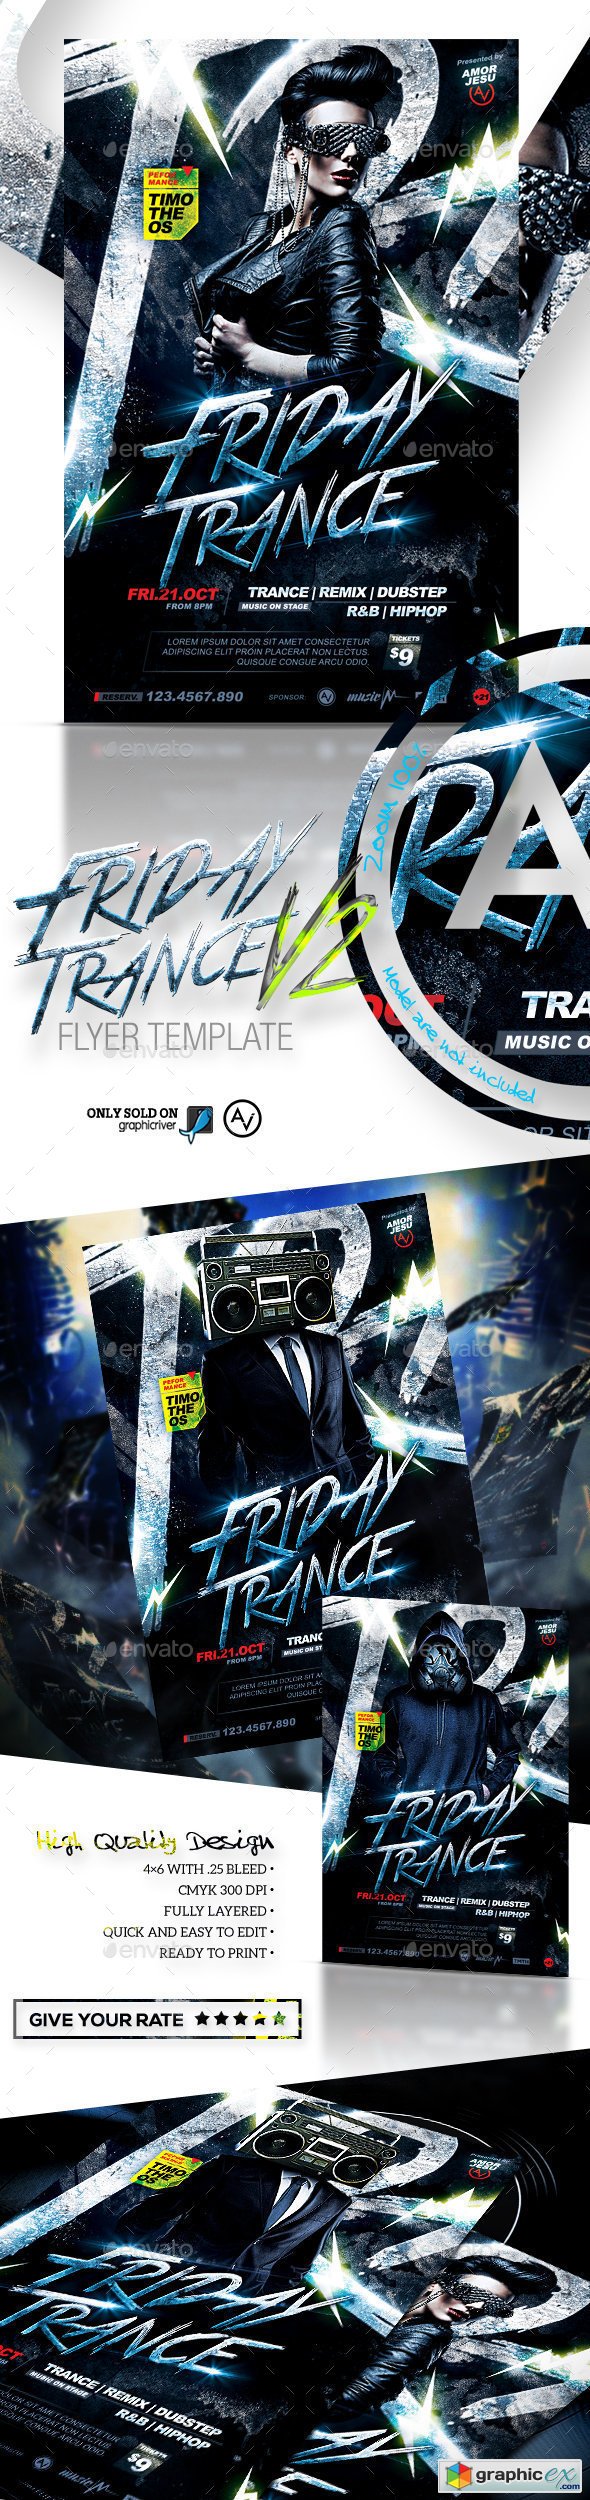 Friday Trance Flyer Template V2